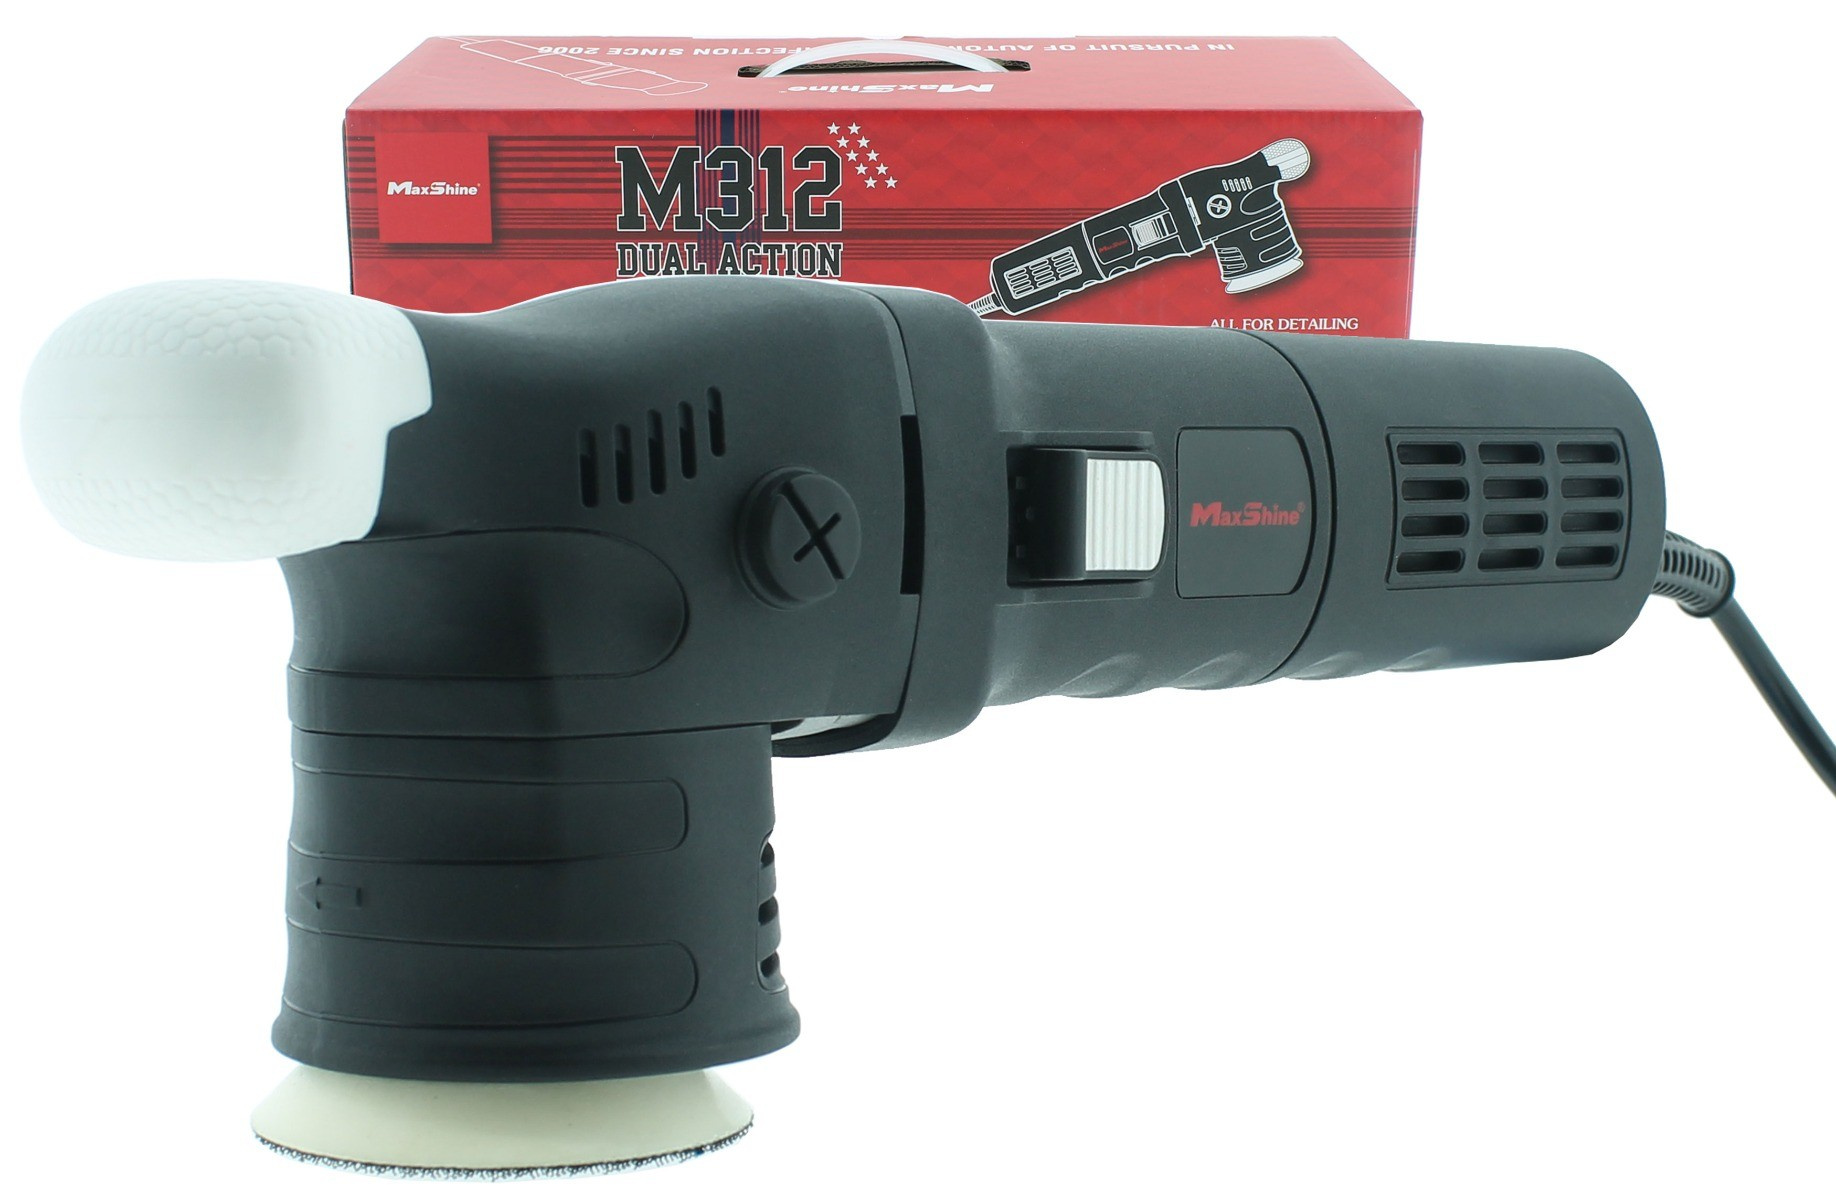 Maxshine M312 12mm/550W Dual Action Polisher